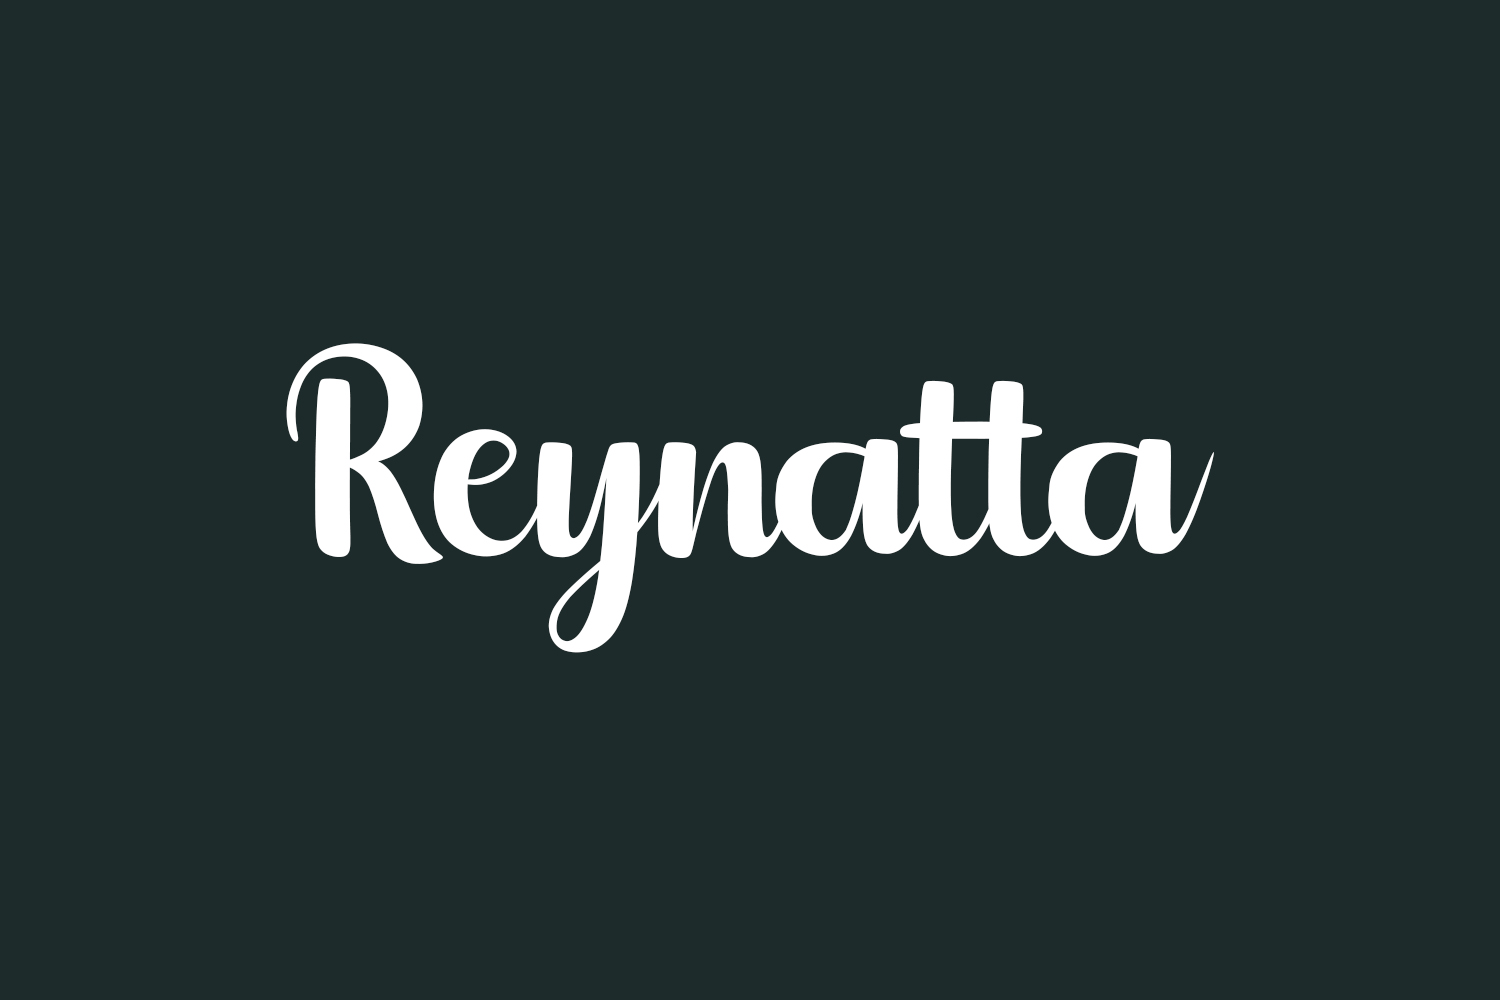 Reynatta Free Font